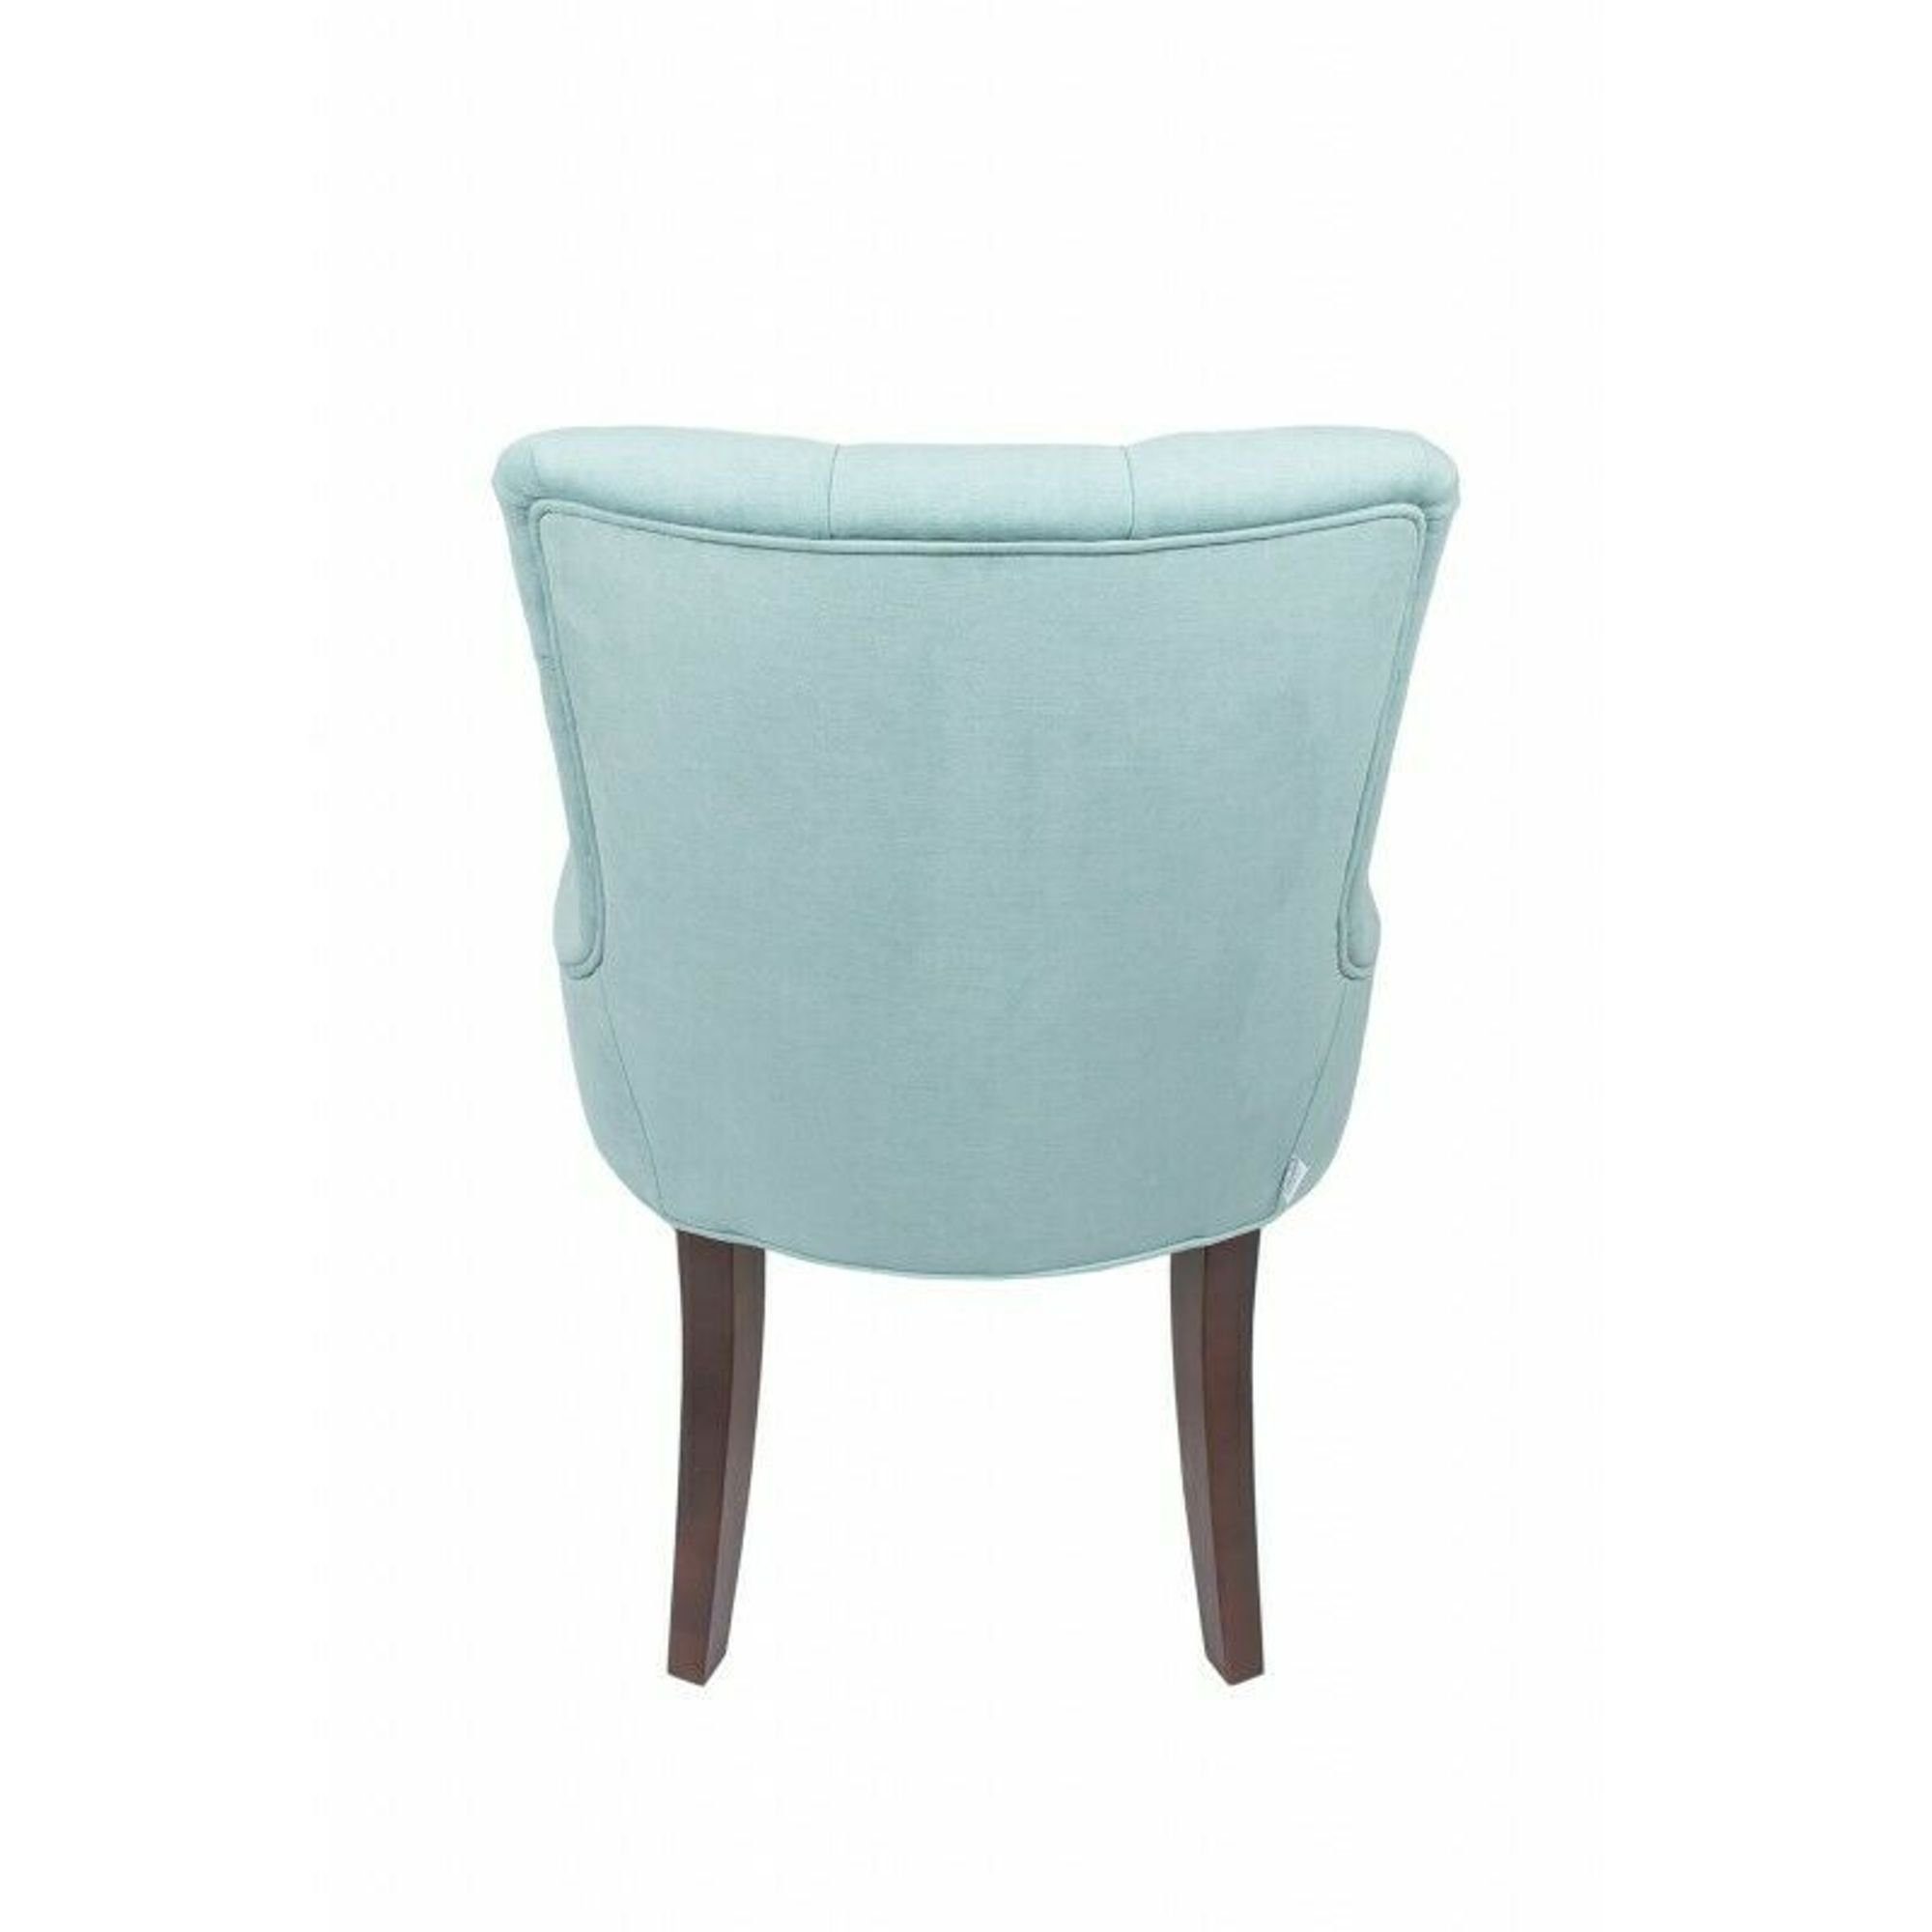 Textil Gruppe Chesterfield Hotel Stühle Garnitur Stuhl 8xSet Blau Stuhl, JVmoebel Design Neu Polster